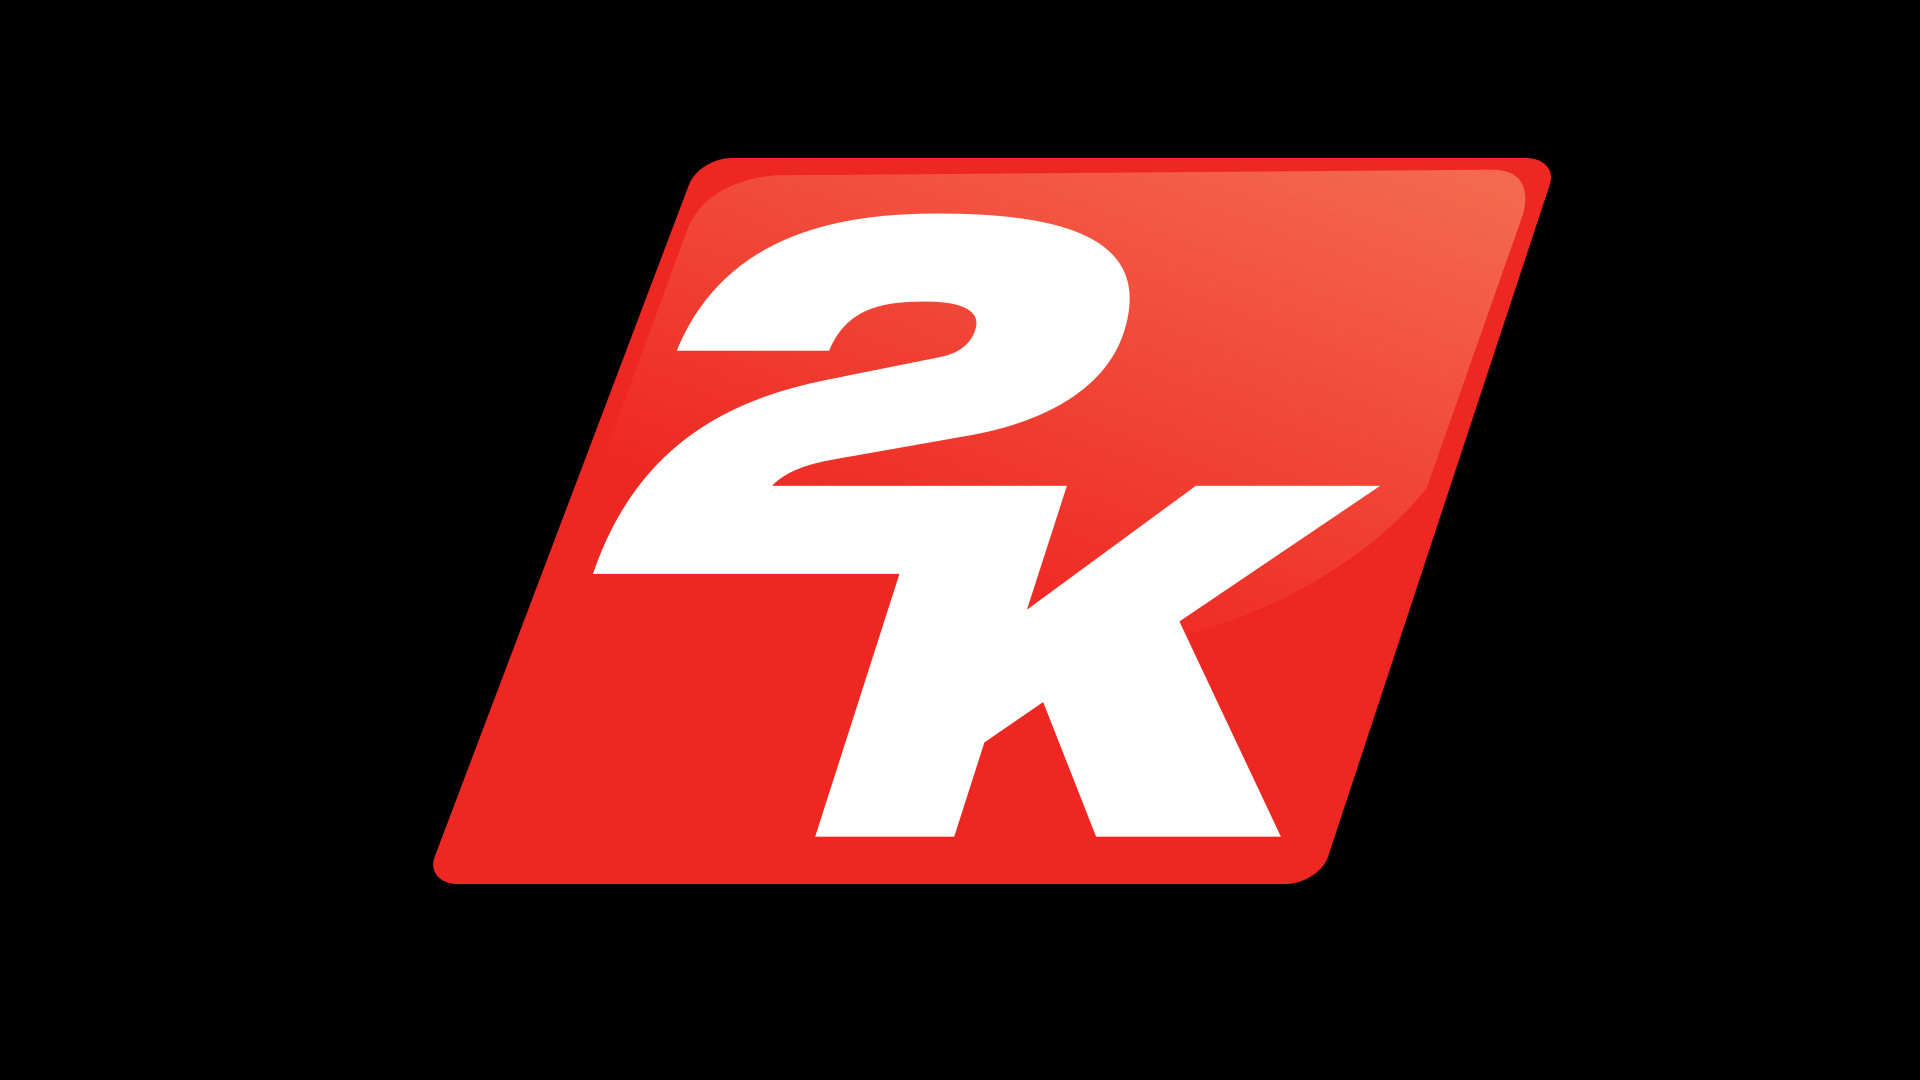 2к. 2k games. Логотип 2. 2k логотип. 2k компания.